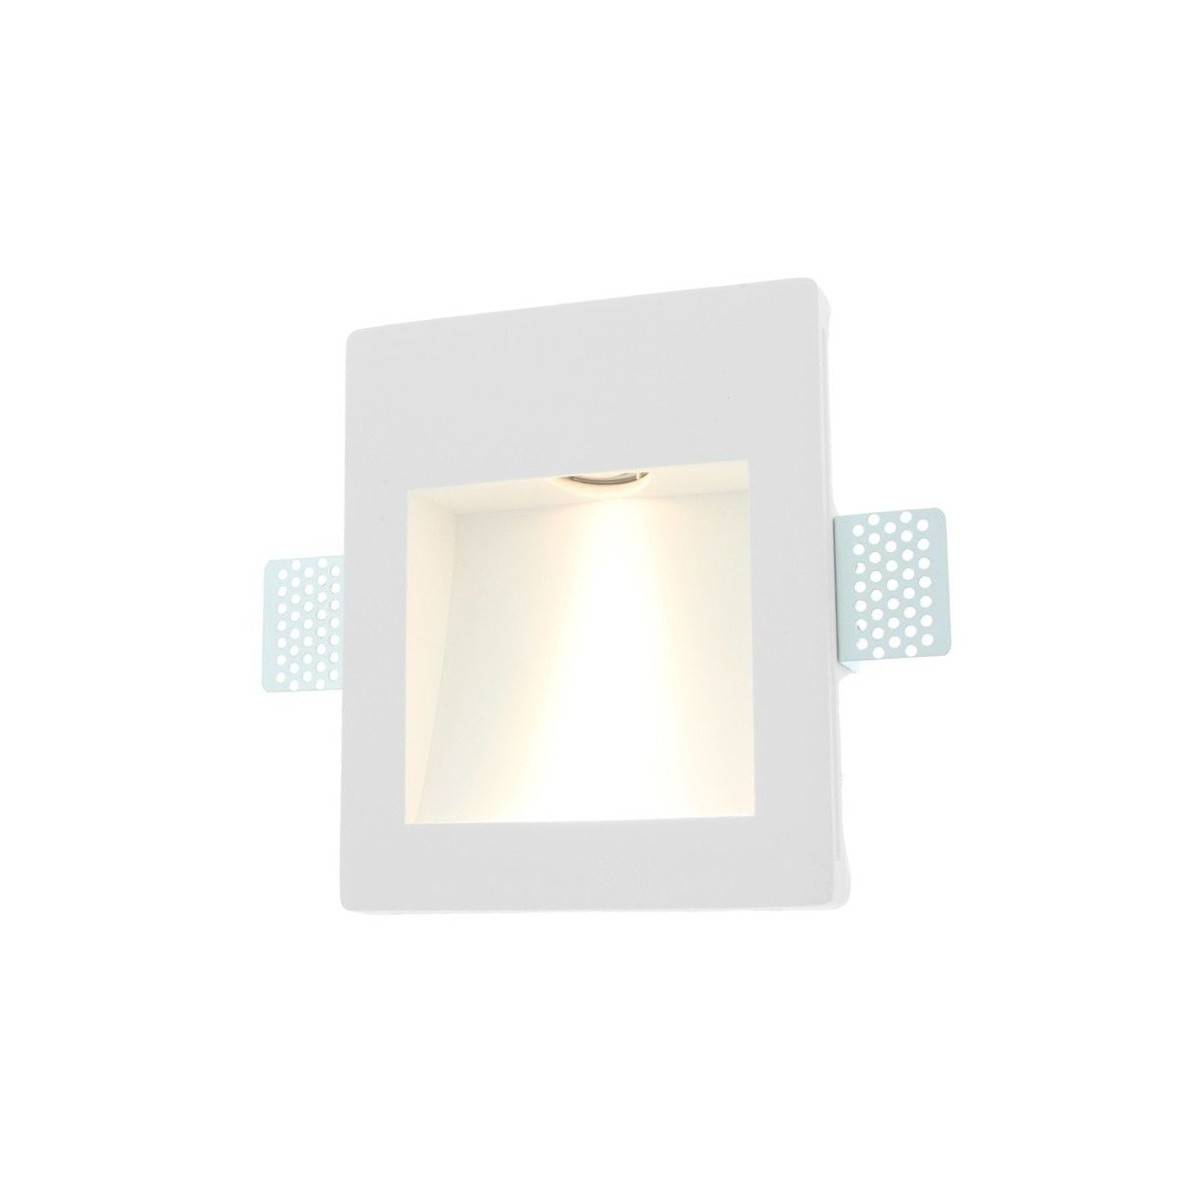 MUR" 1W trimless plaster recessed wall light "MUR